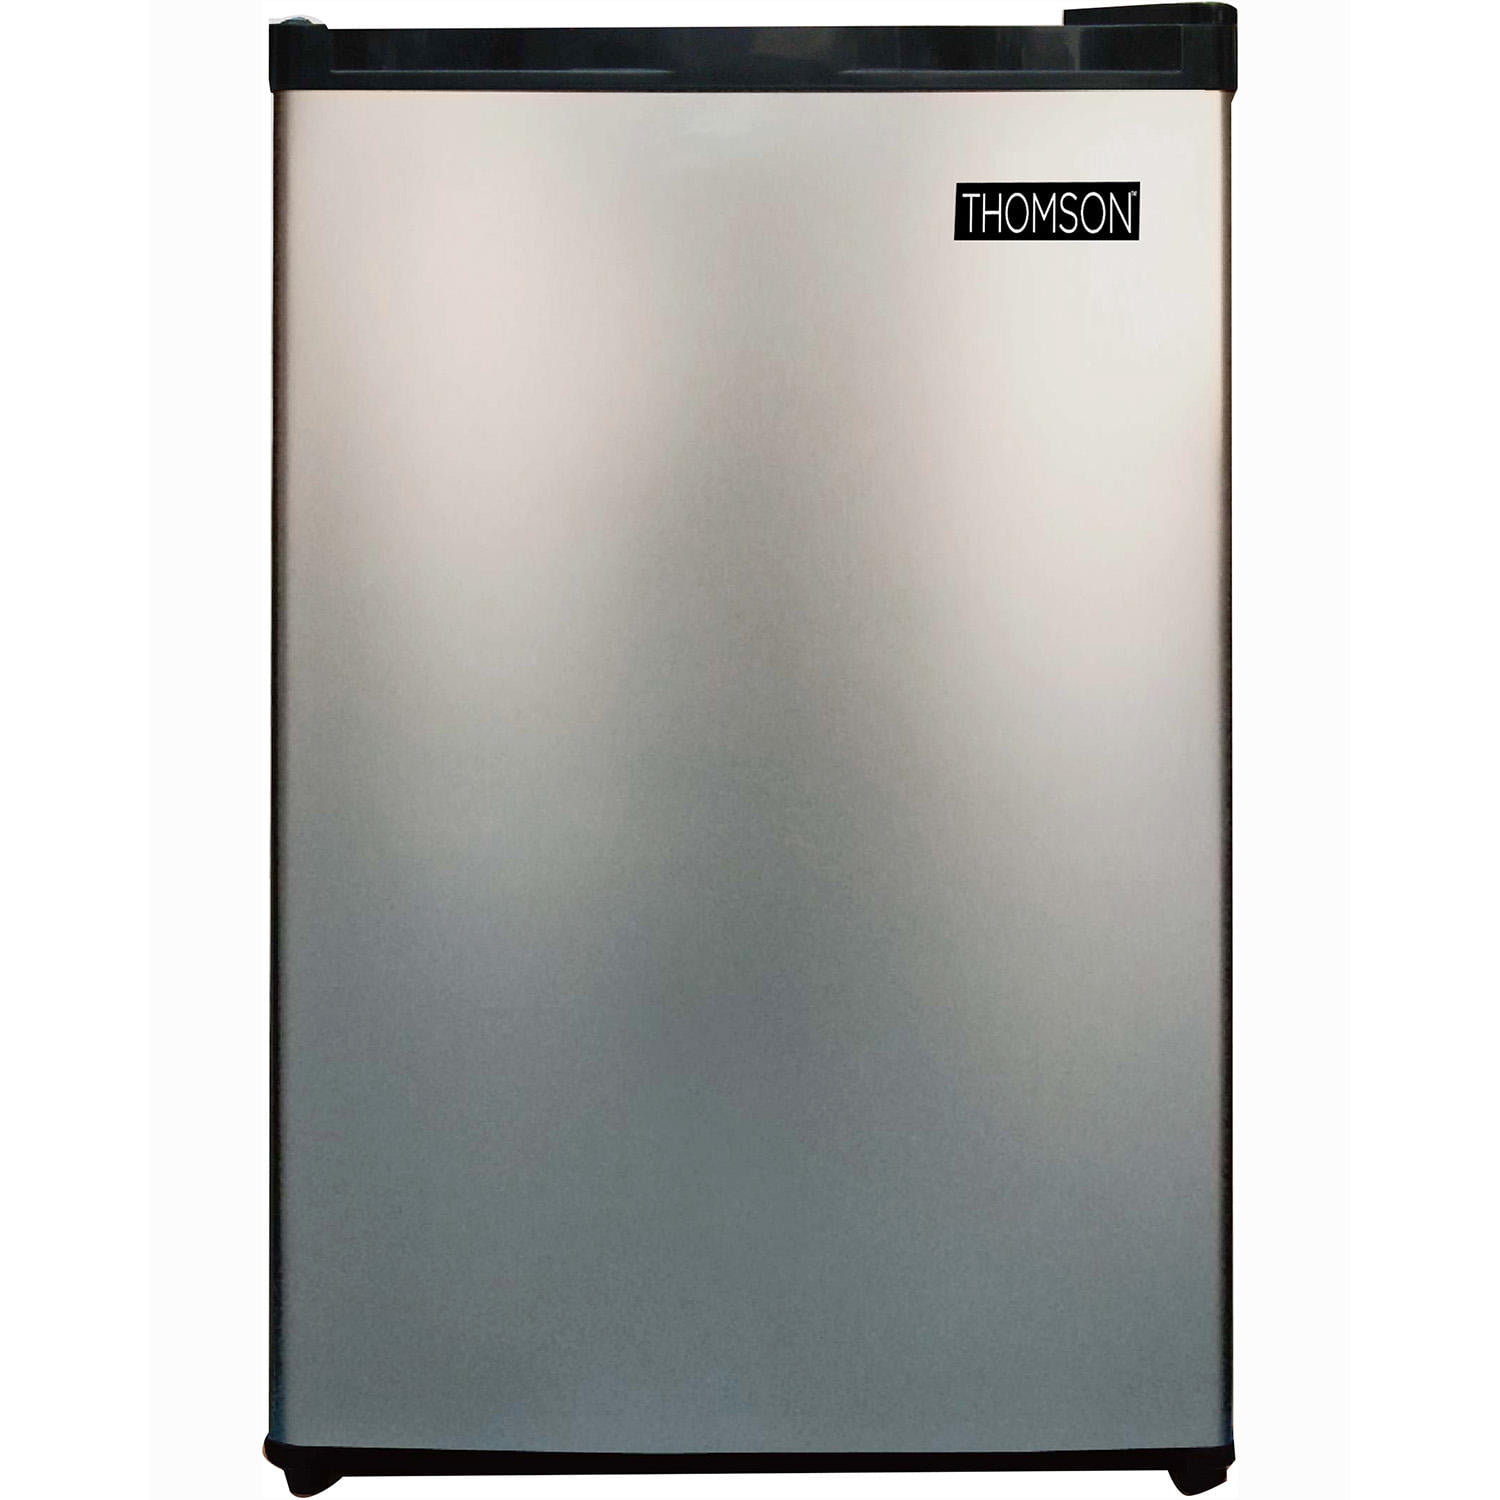 Mini Fridge Stand Universal Refrigerator Stand Adjustable Stand Base FU9721  Silver